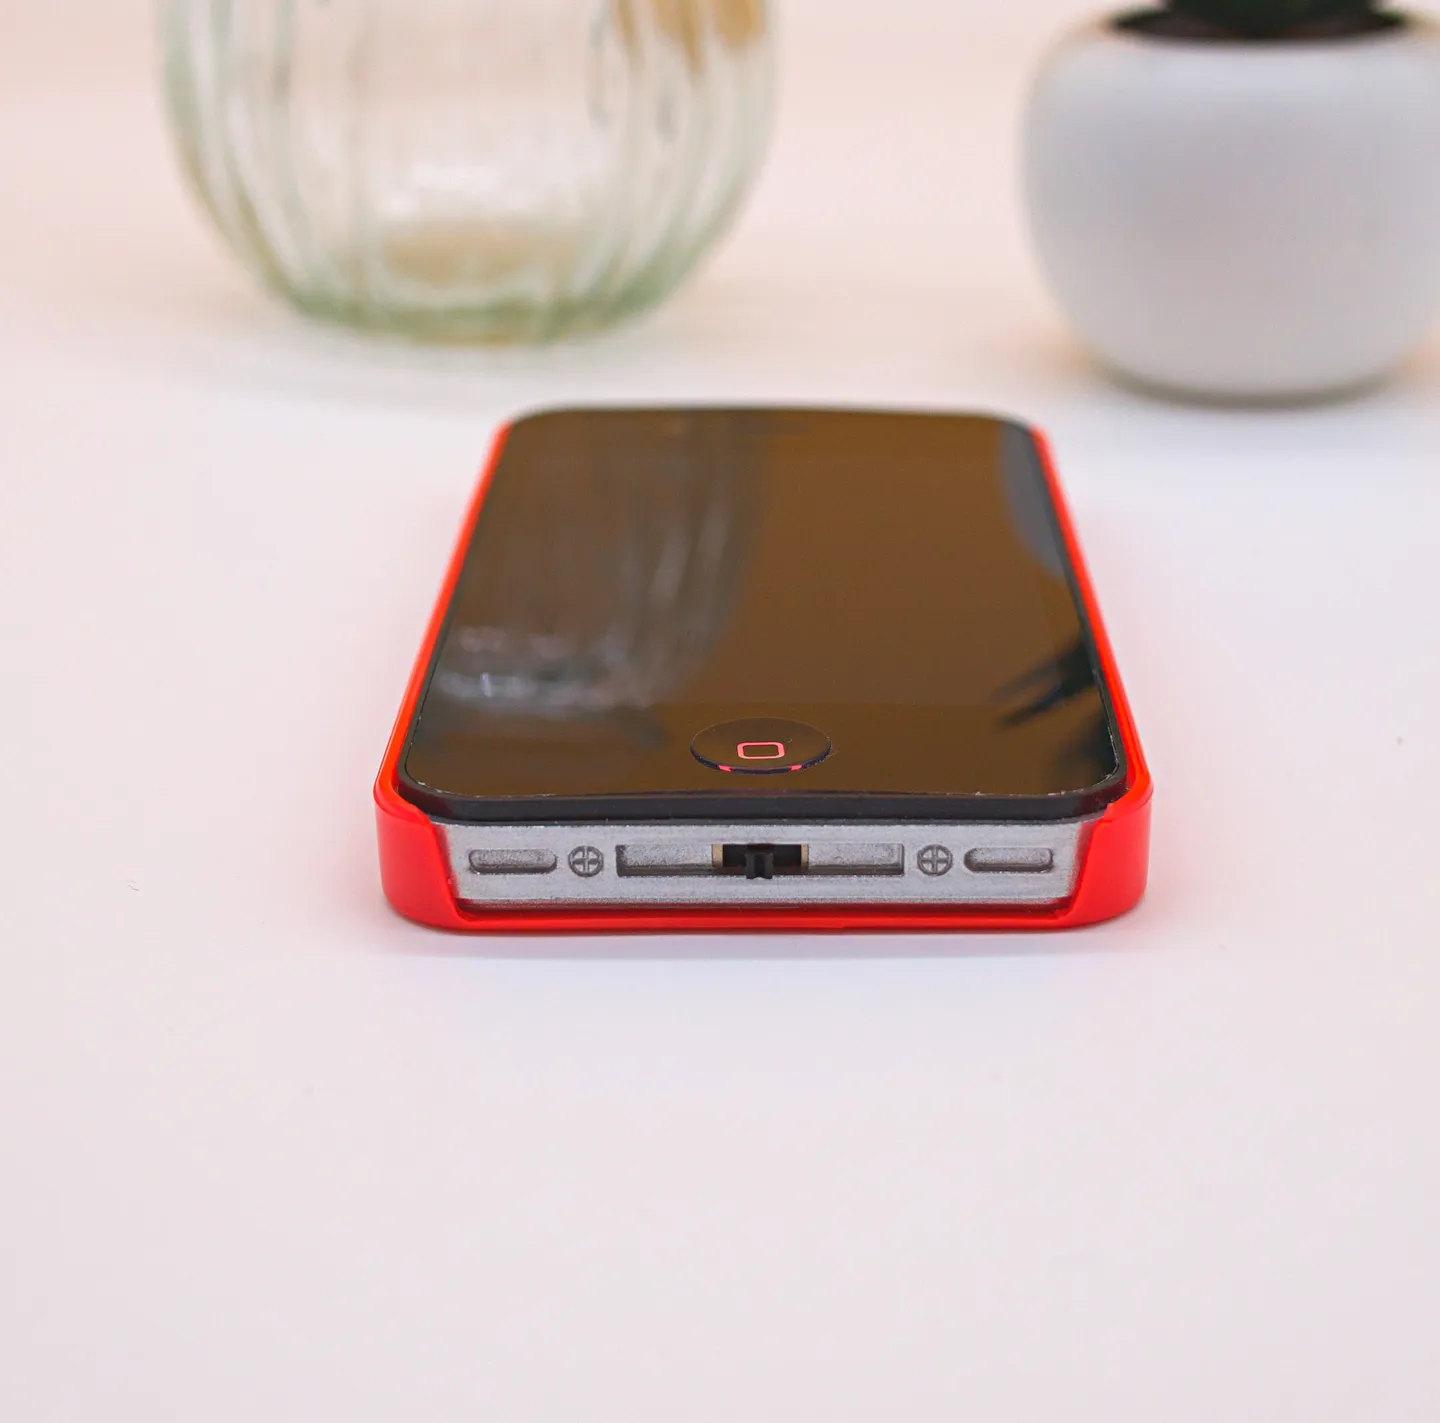 Shocker & Taser - Iphone Shocker Taser, 2 400 000 Voltios, discreción asegurada (Versión Roja)